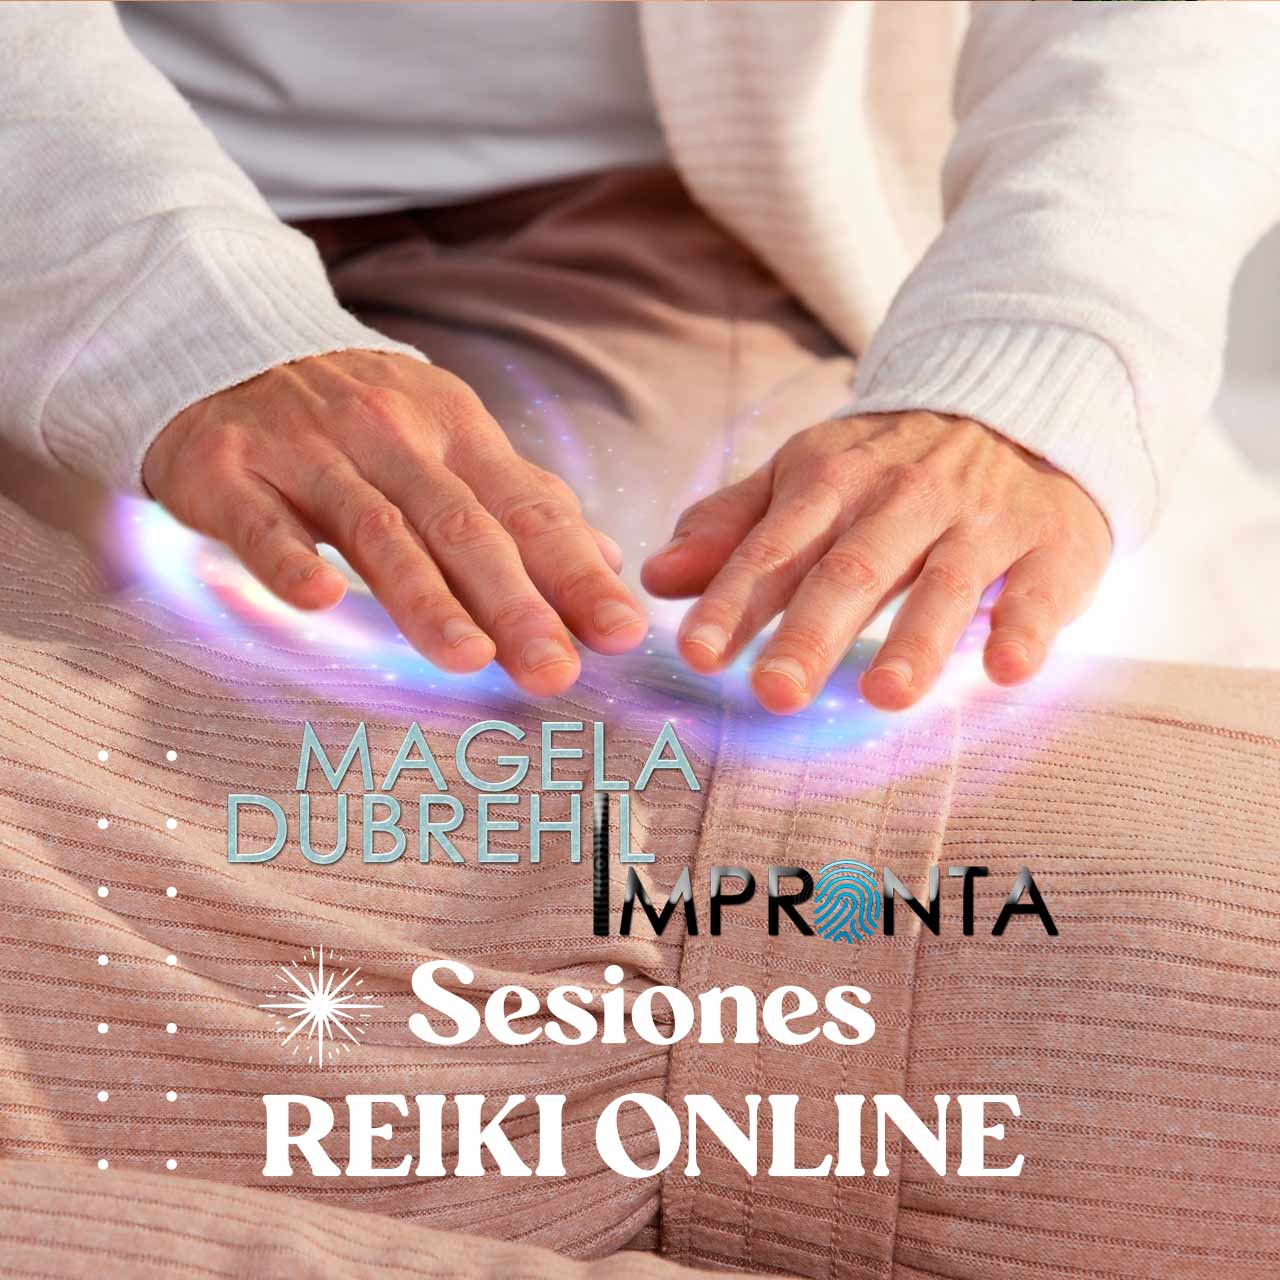 Sesiones de Reiki Online Magela Dubrehil